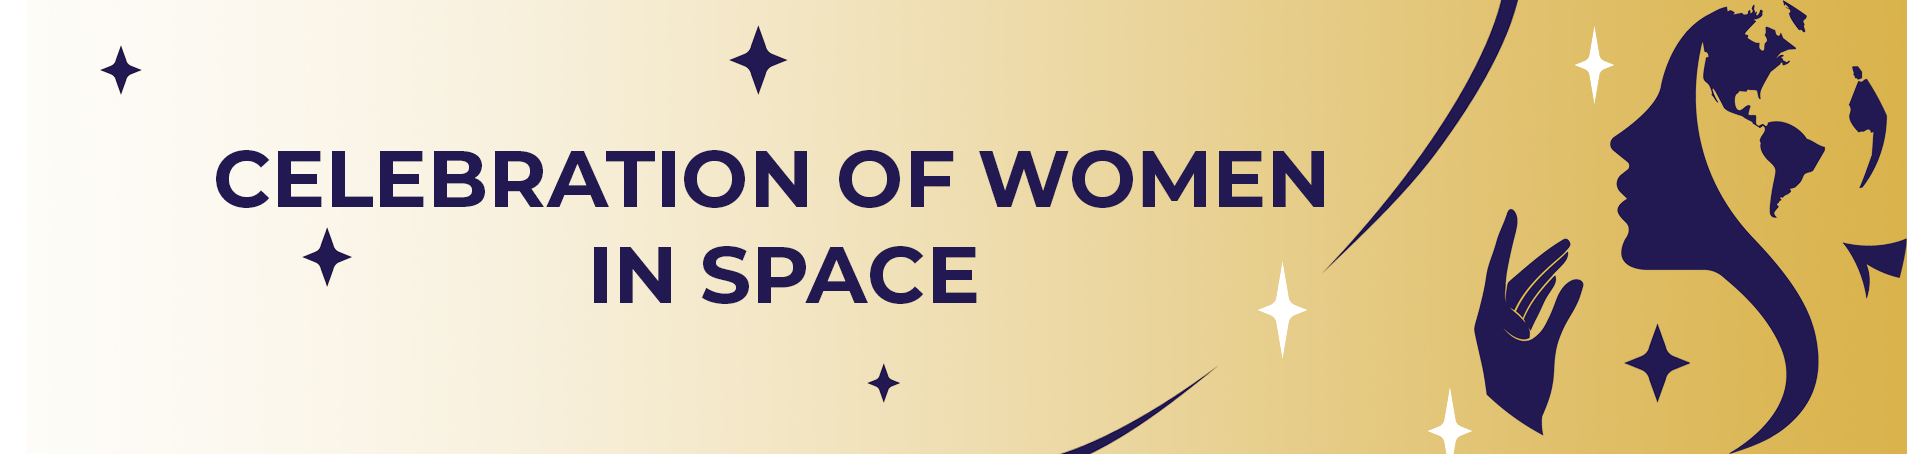 Celebration of Women in Space Hero Image